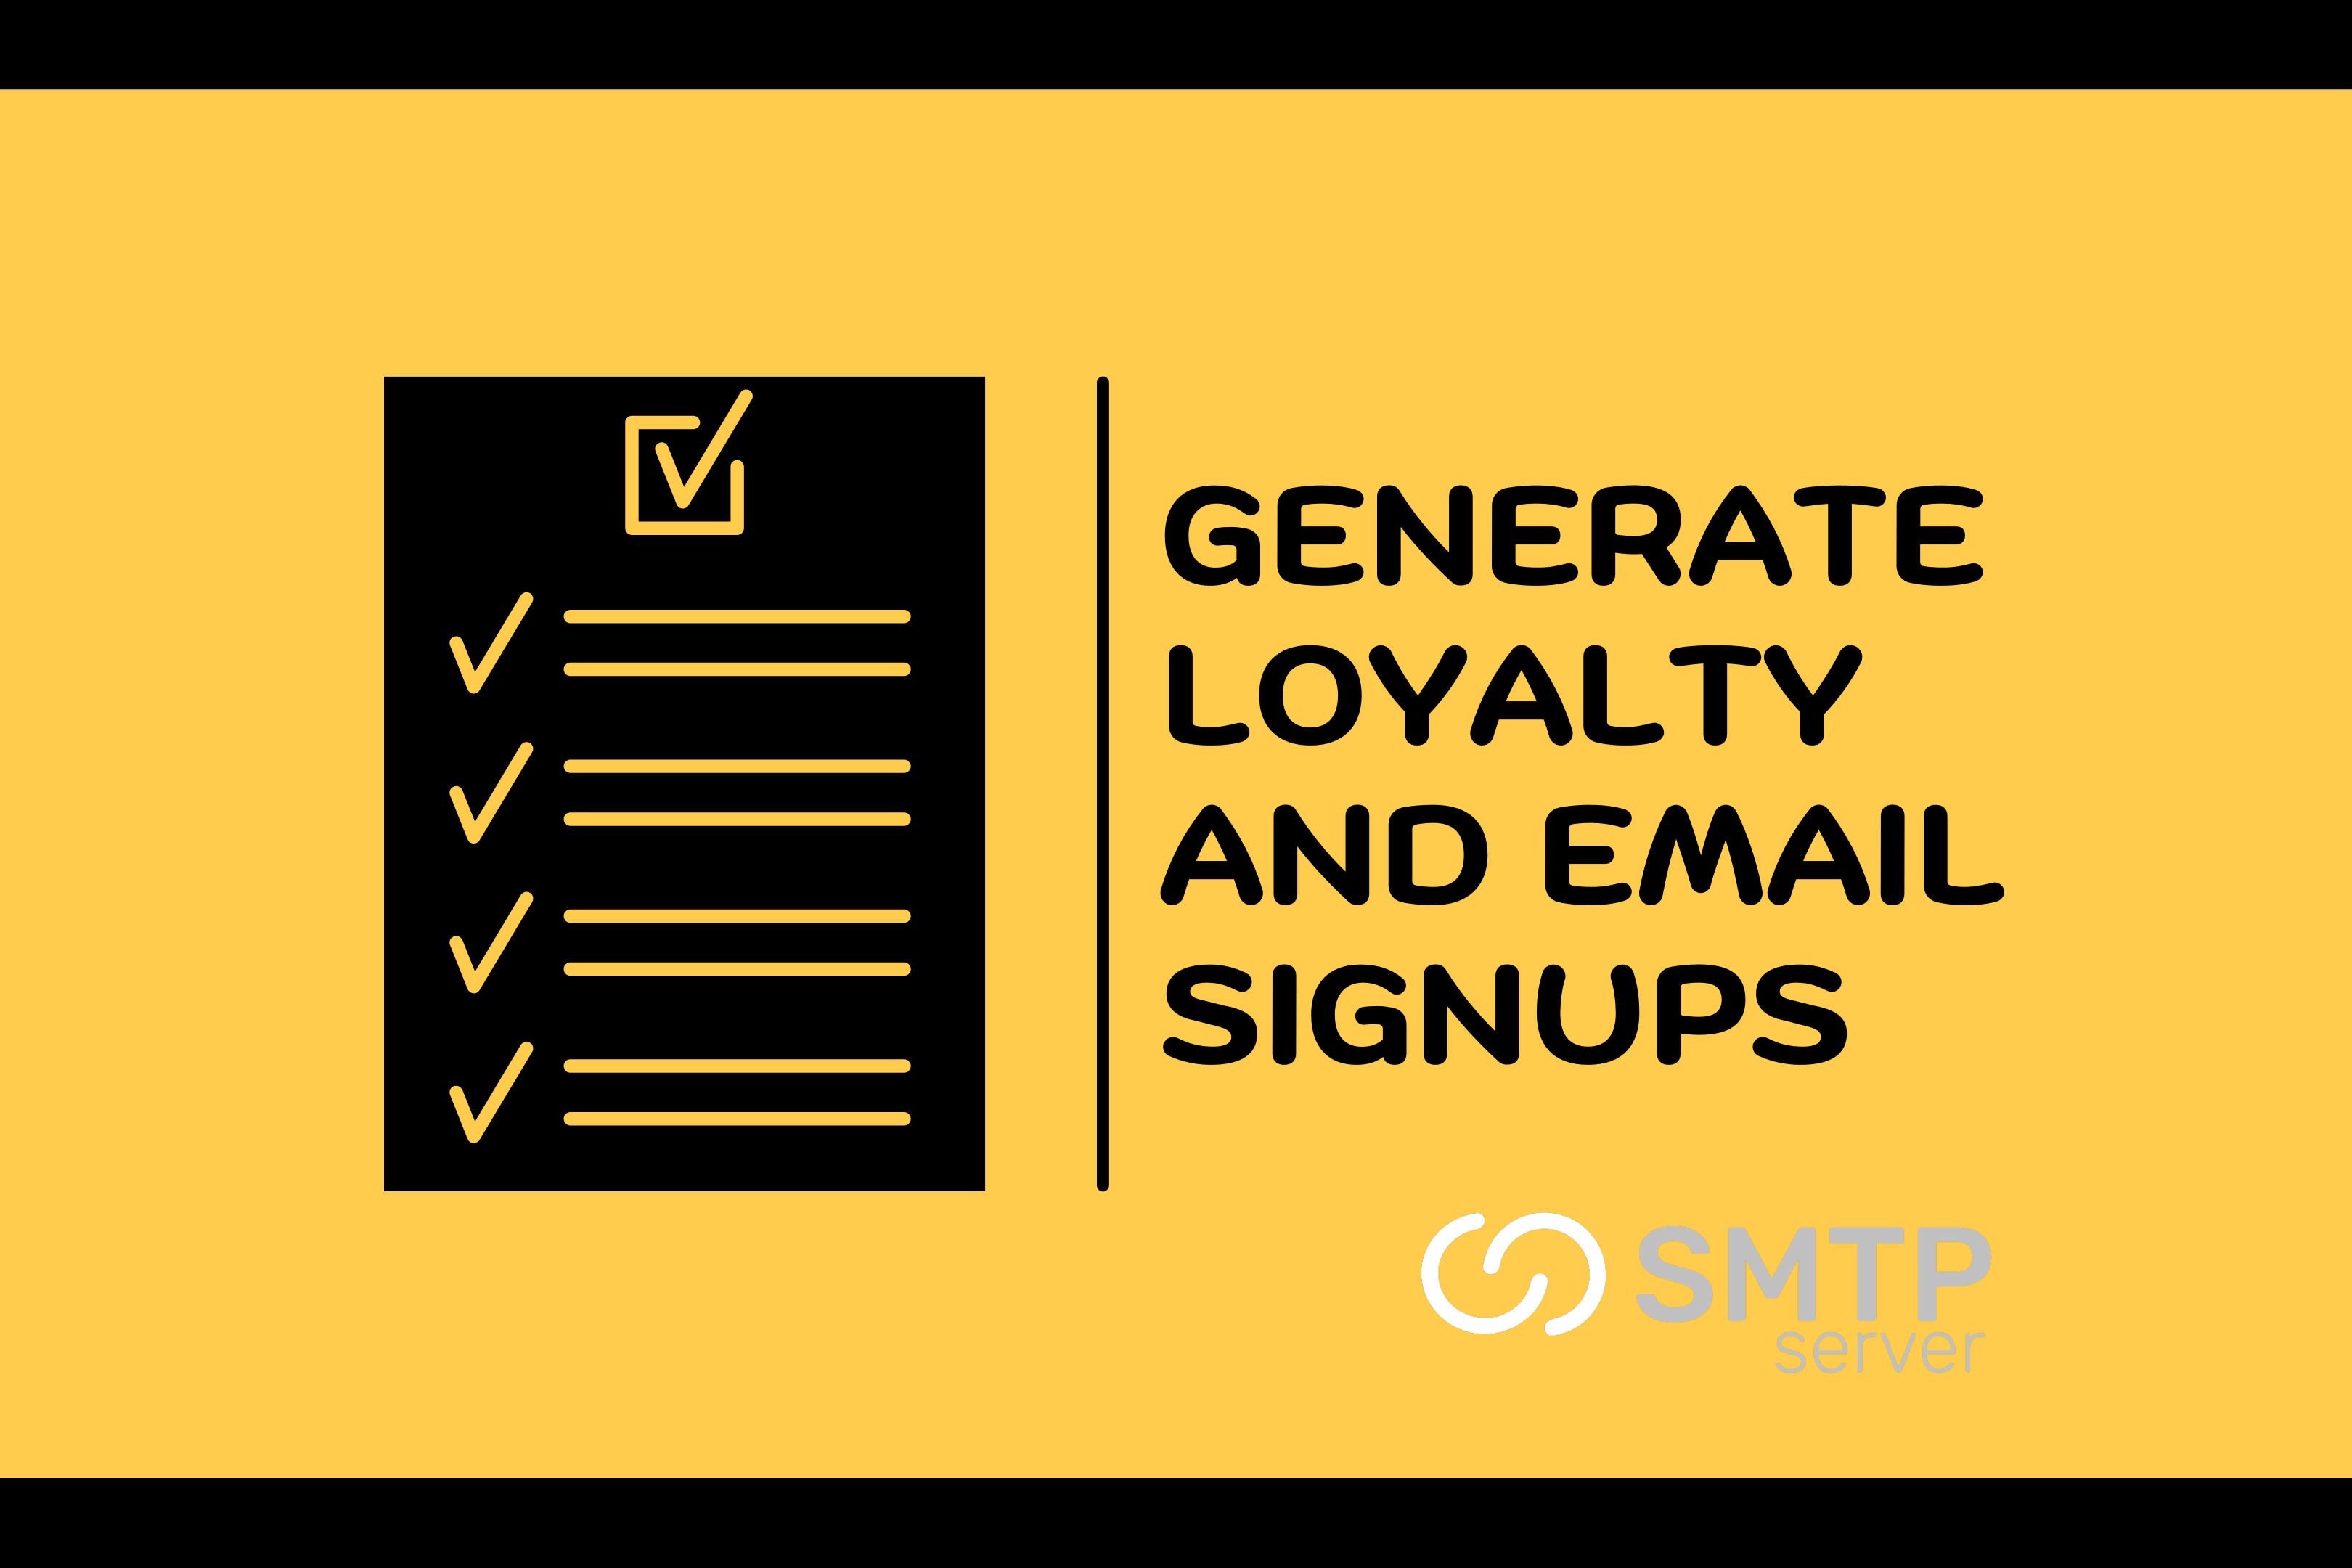 Increase Customer Dedication and Email Signups